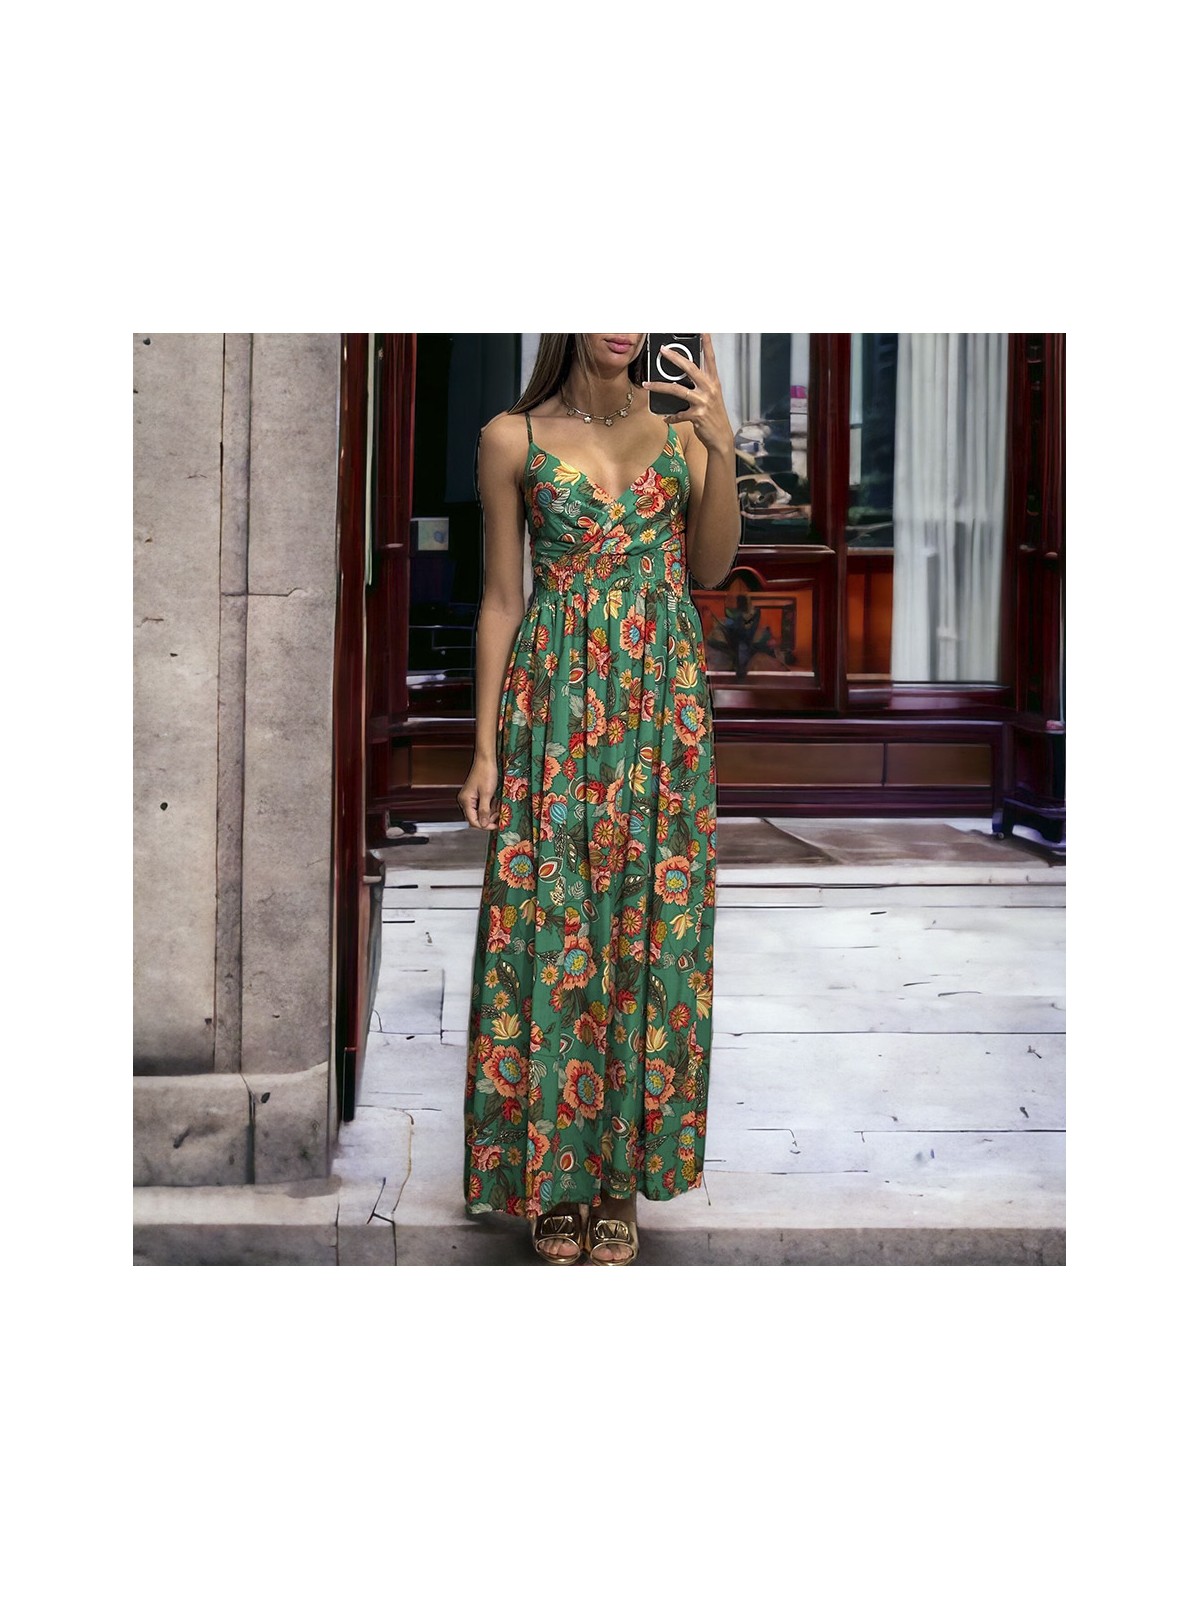 Longue robe avec motif fleuris verte bretelles amovible - 3